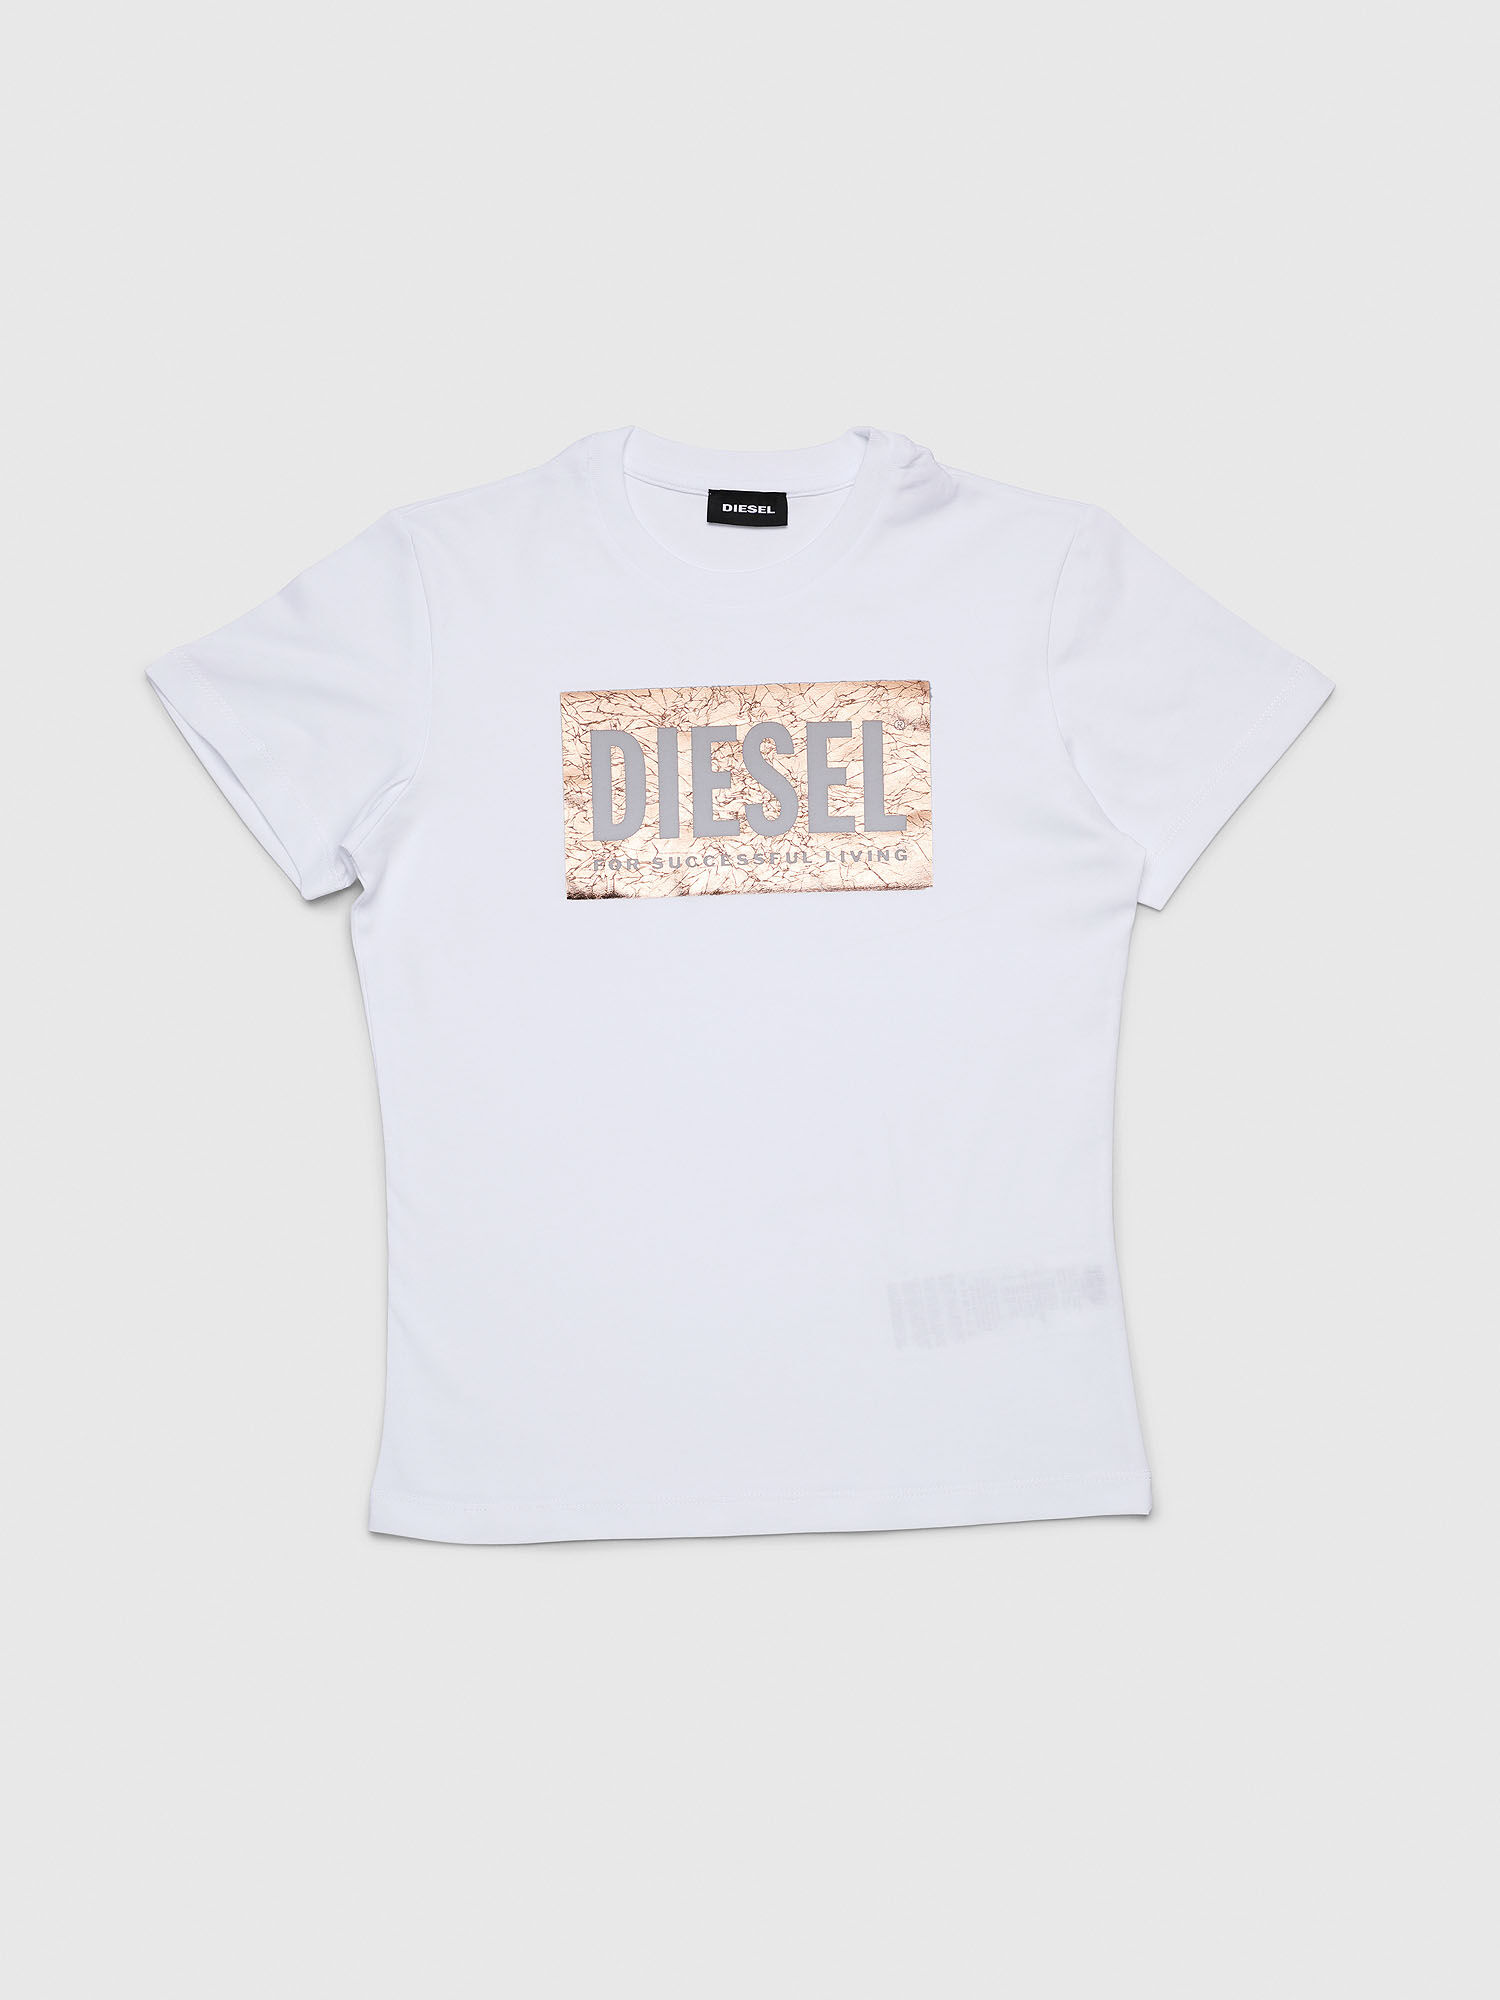 Diesel - TFOIL, White - Image 1